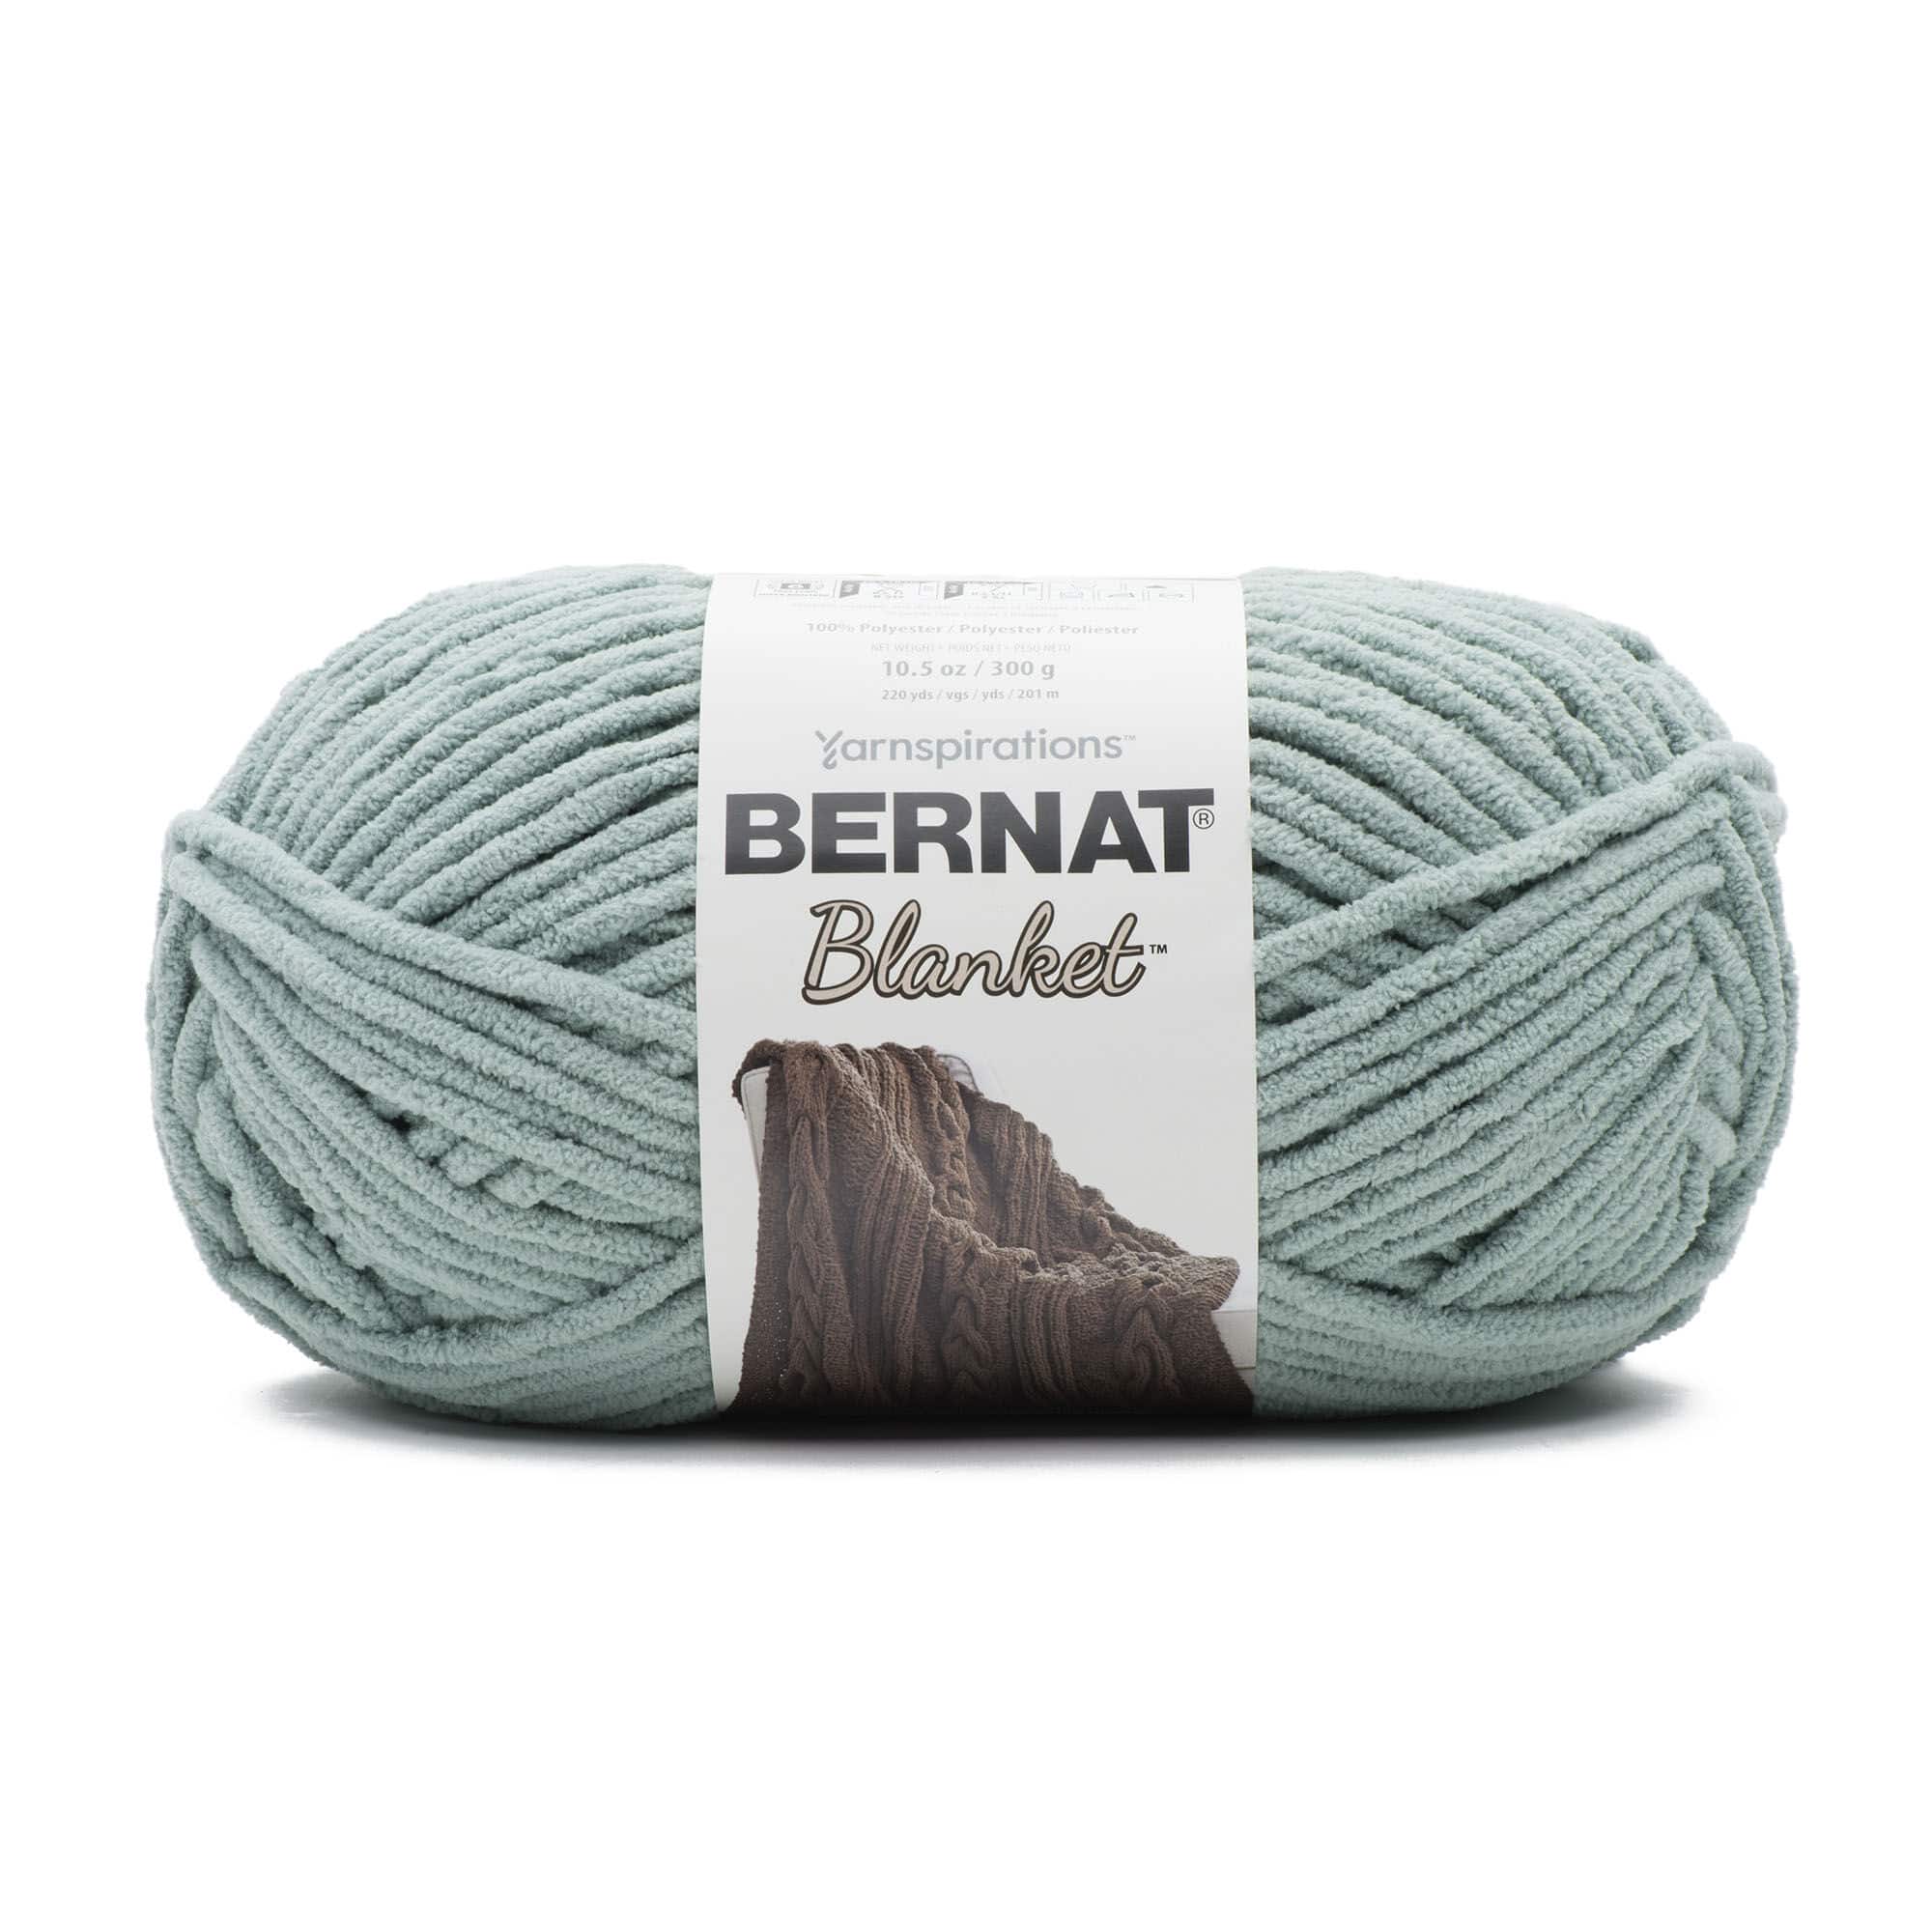 Bernat Blanket Yarn, Yarn